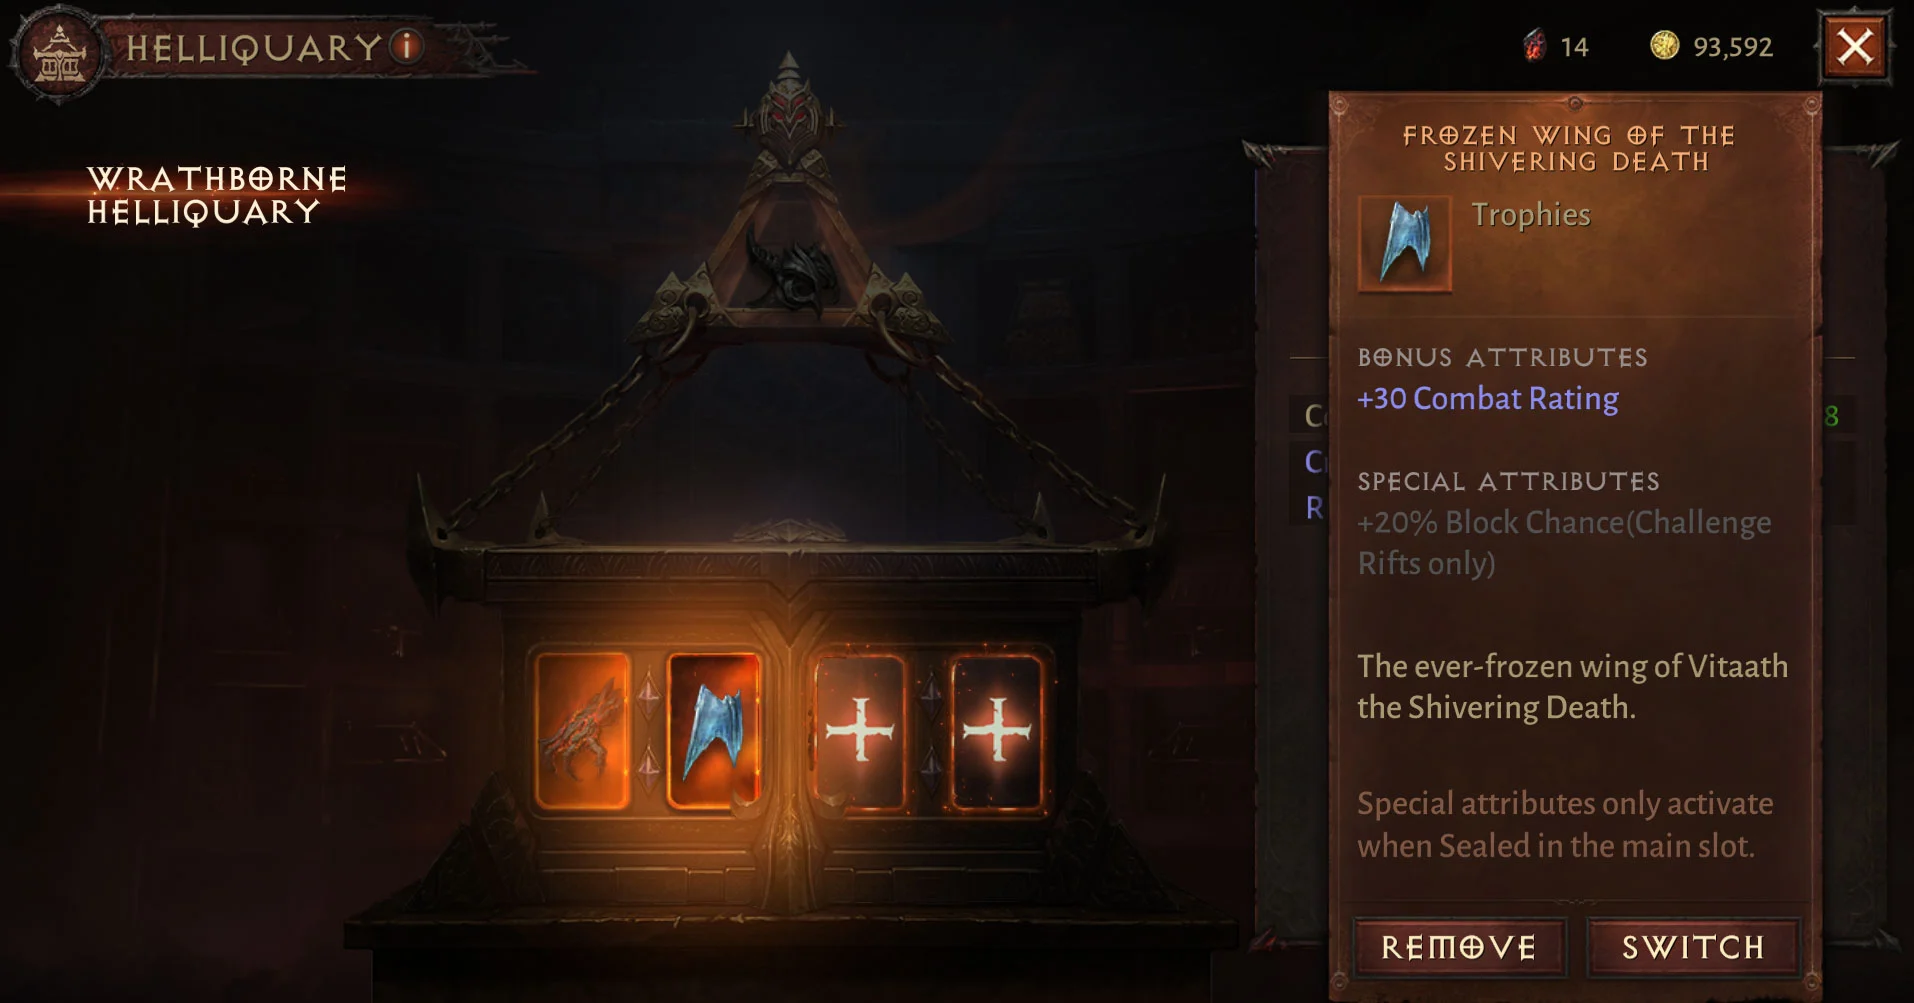 Helliquary Rewards for Defeating Vitaath Diablo Immortal